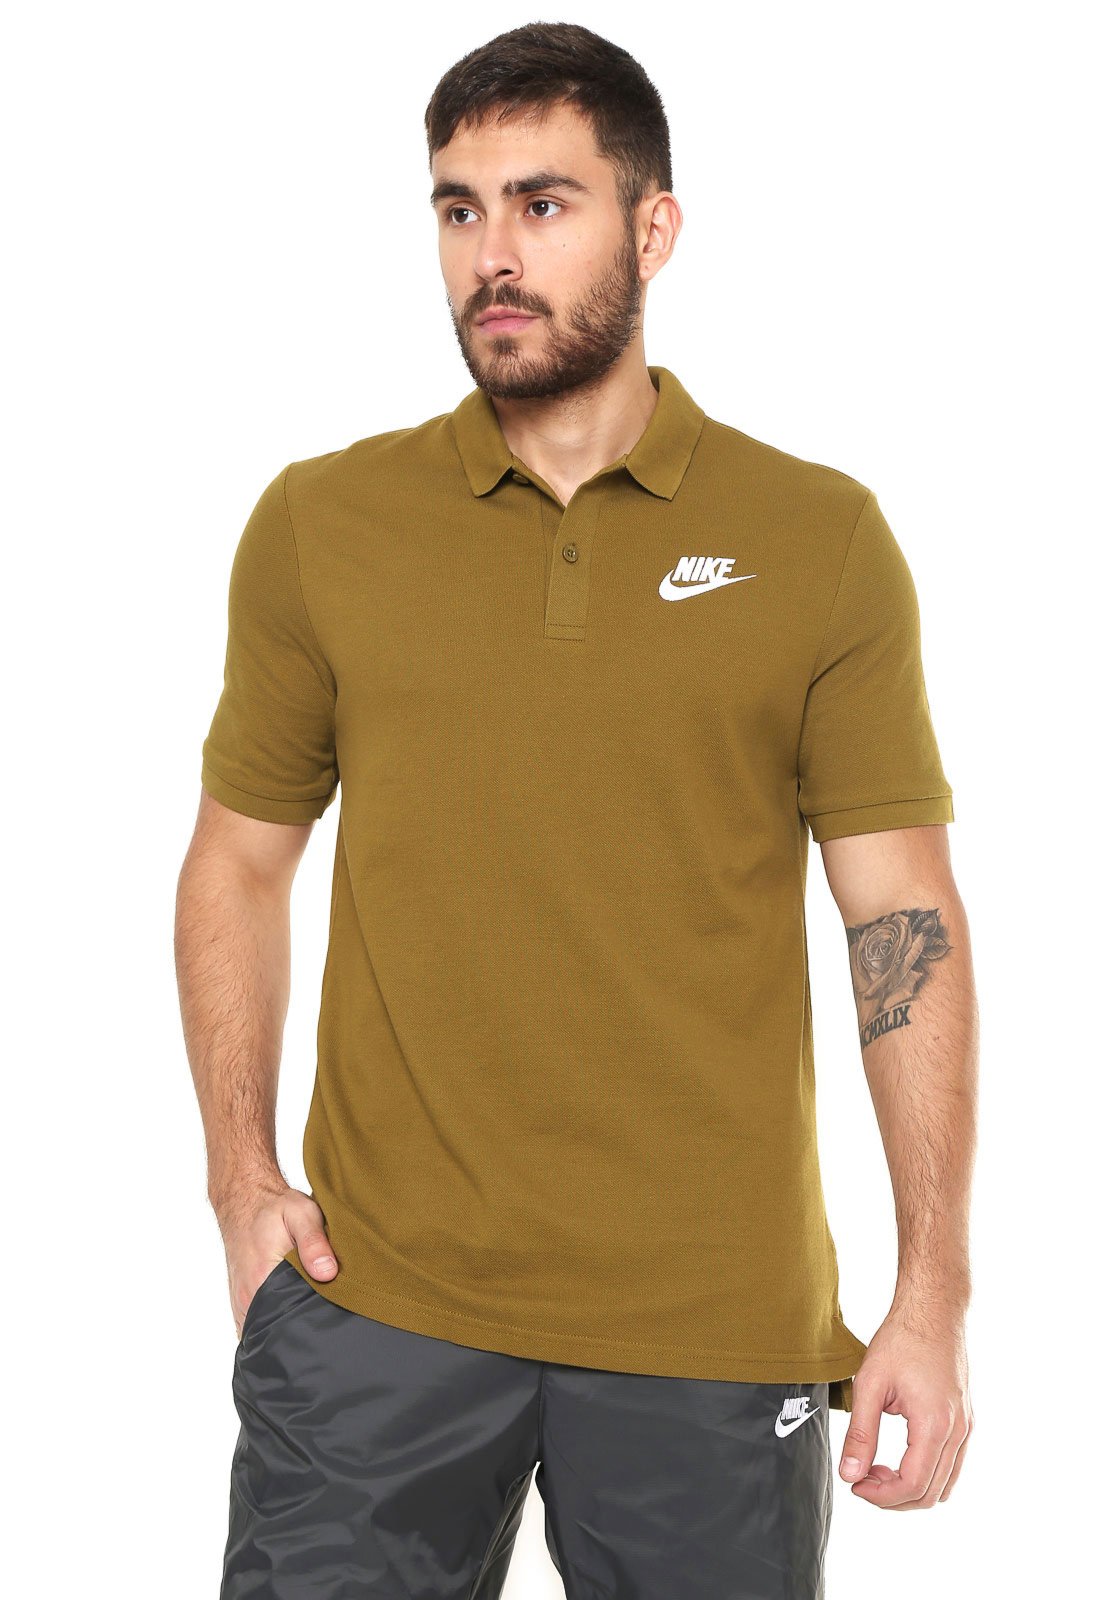 Camiseta Nike Gola Polo Hotsell, 56% OFF | www.pegasusaerogroup.com